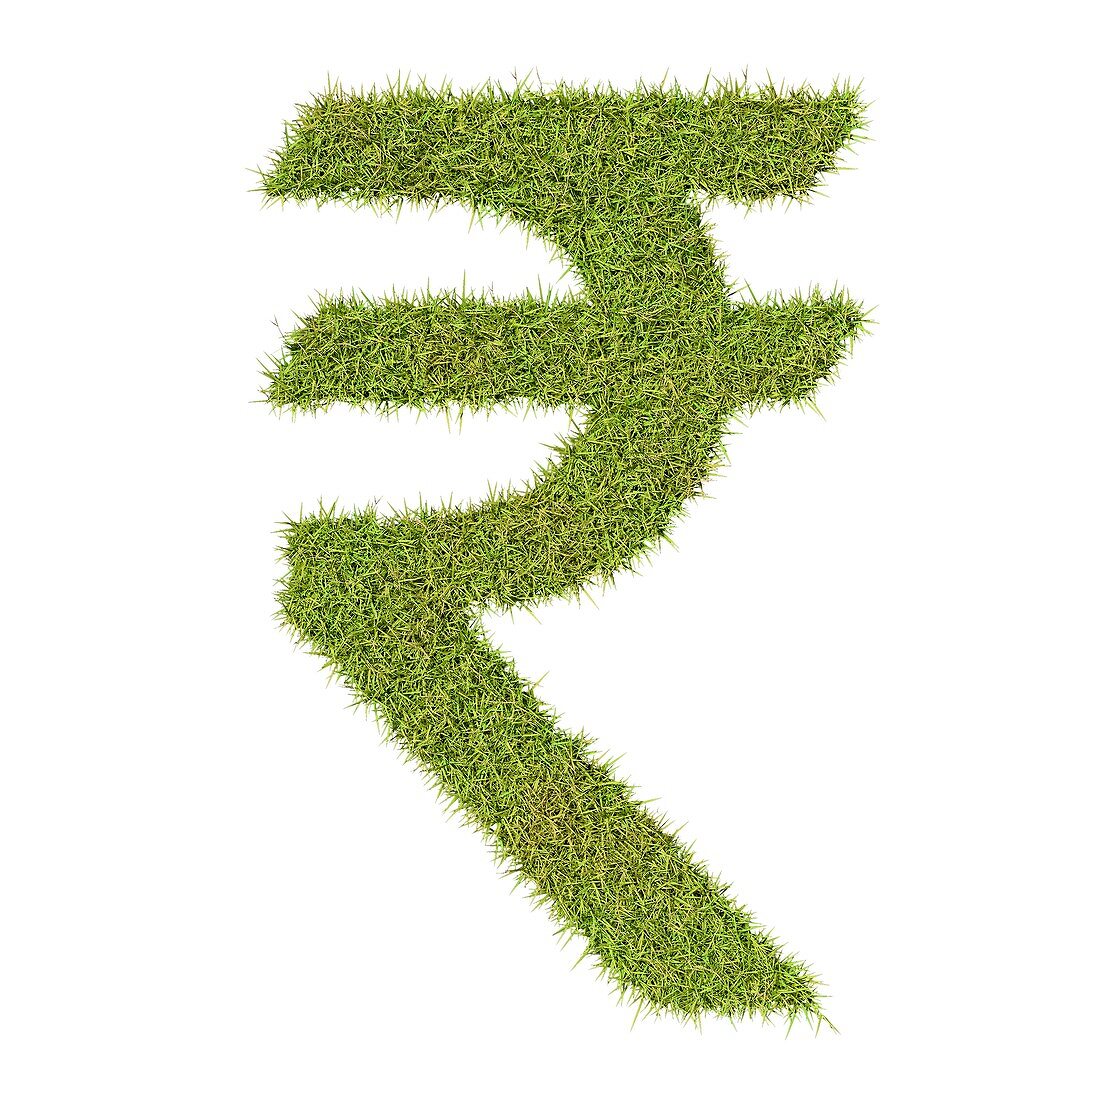 Rupee symbol made from grass